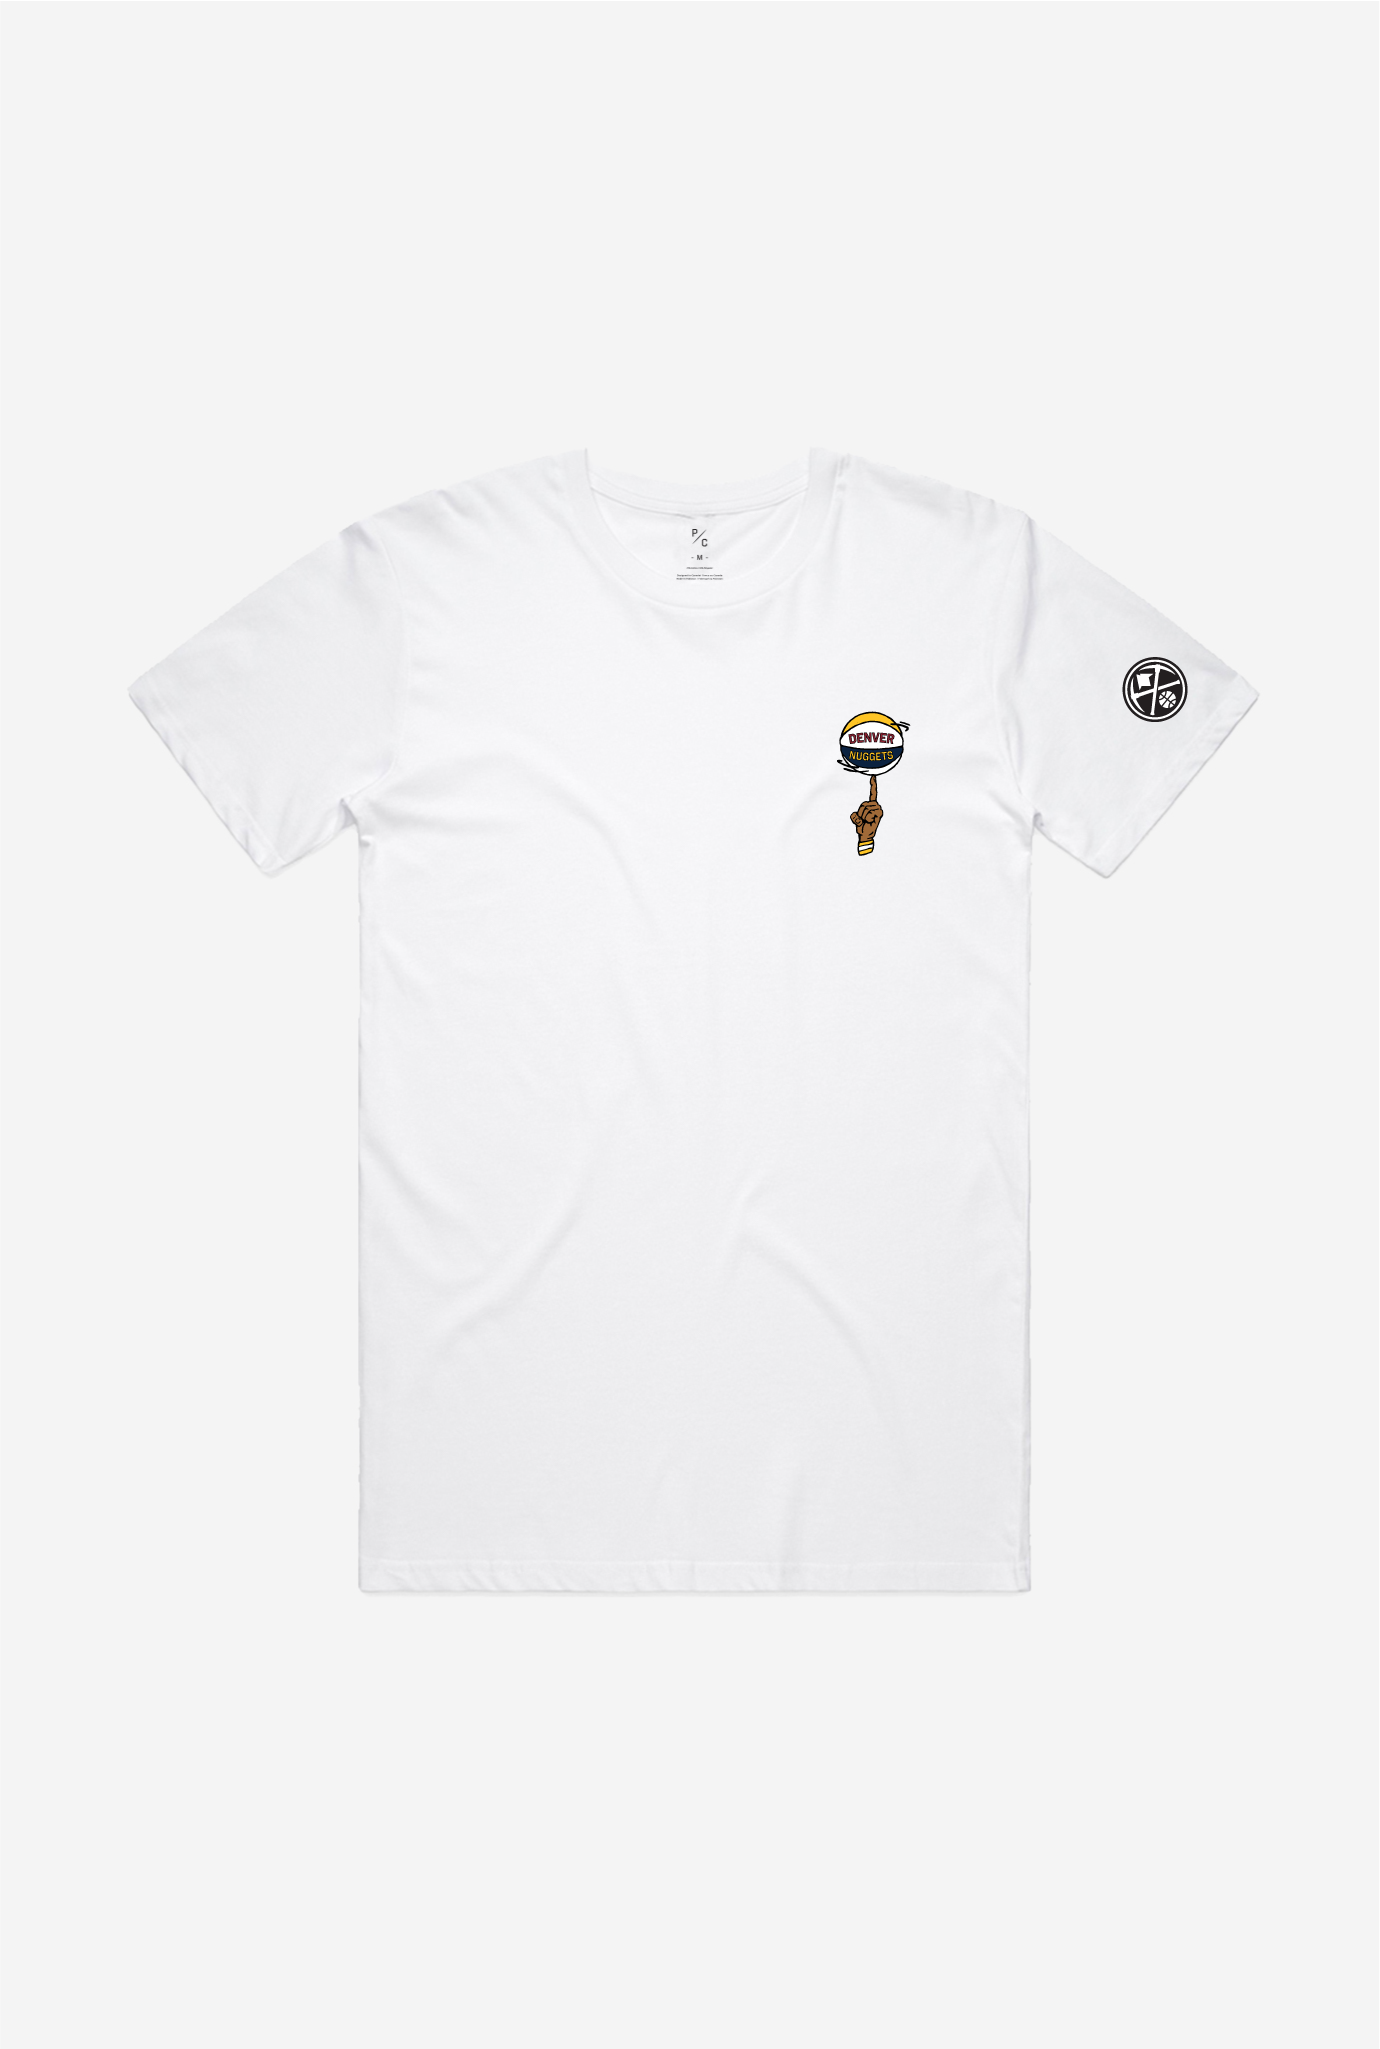 Denver Nuggets Spinning Ball T-Shirt - White